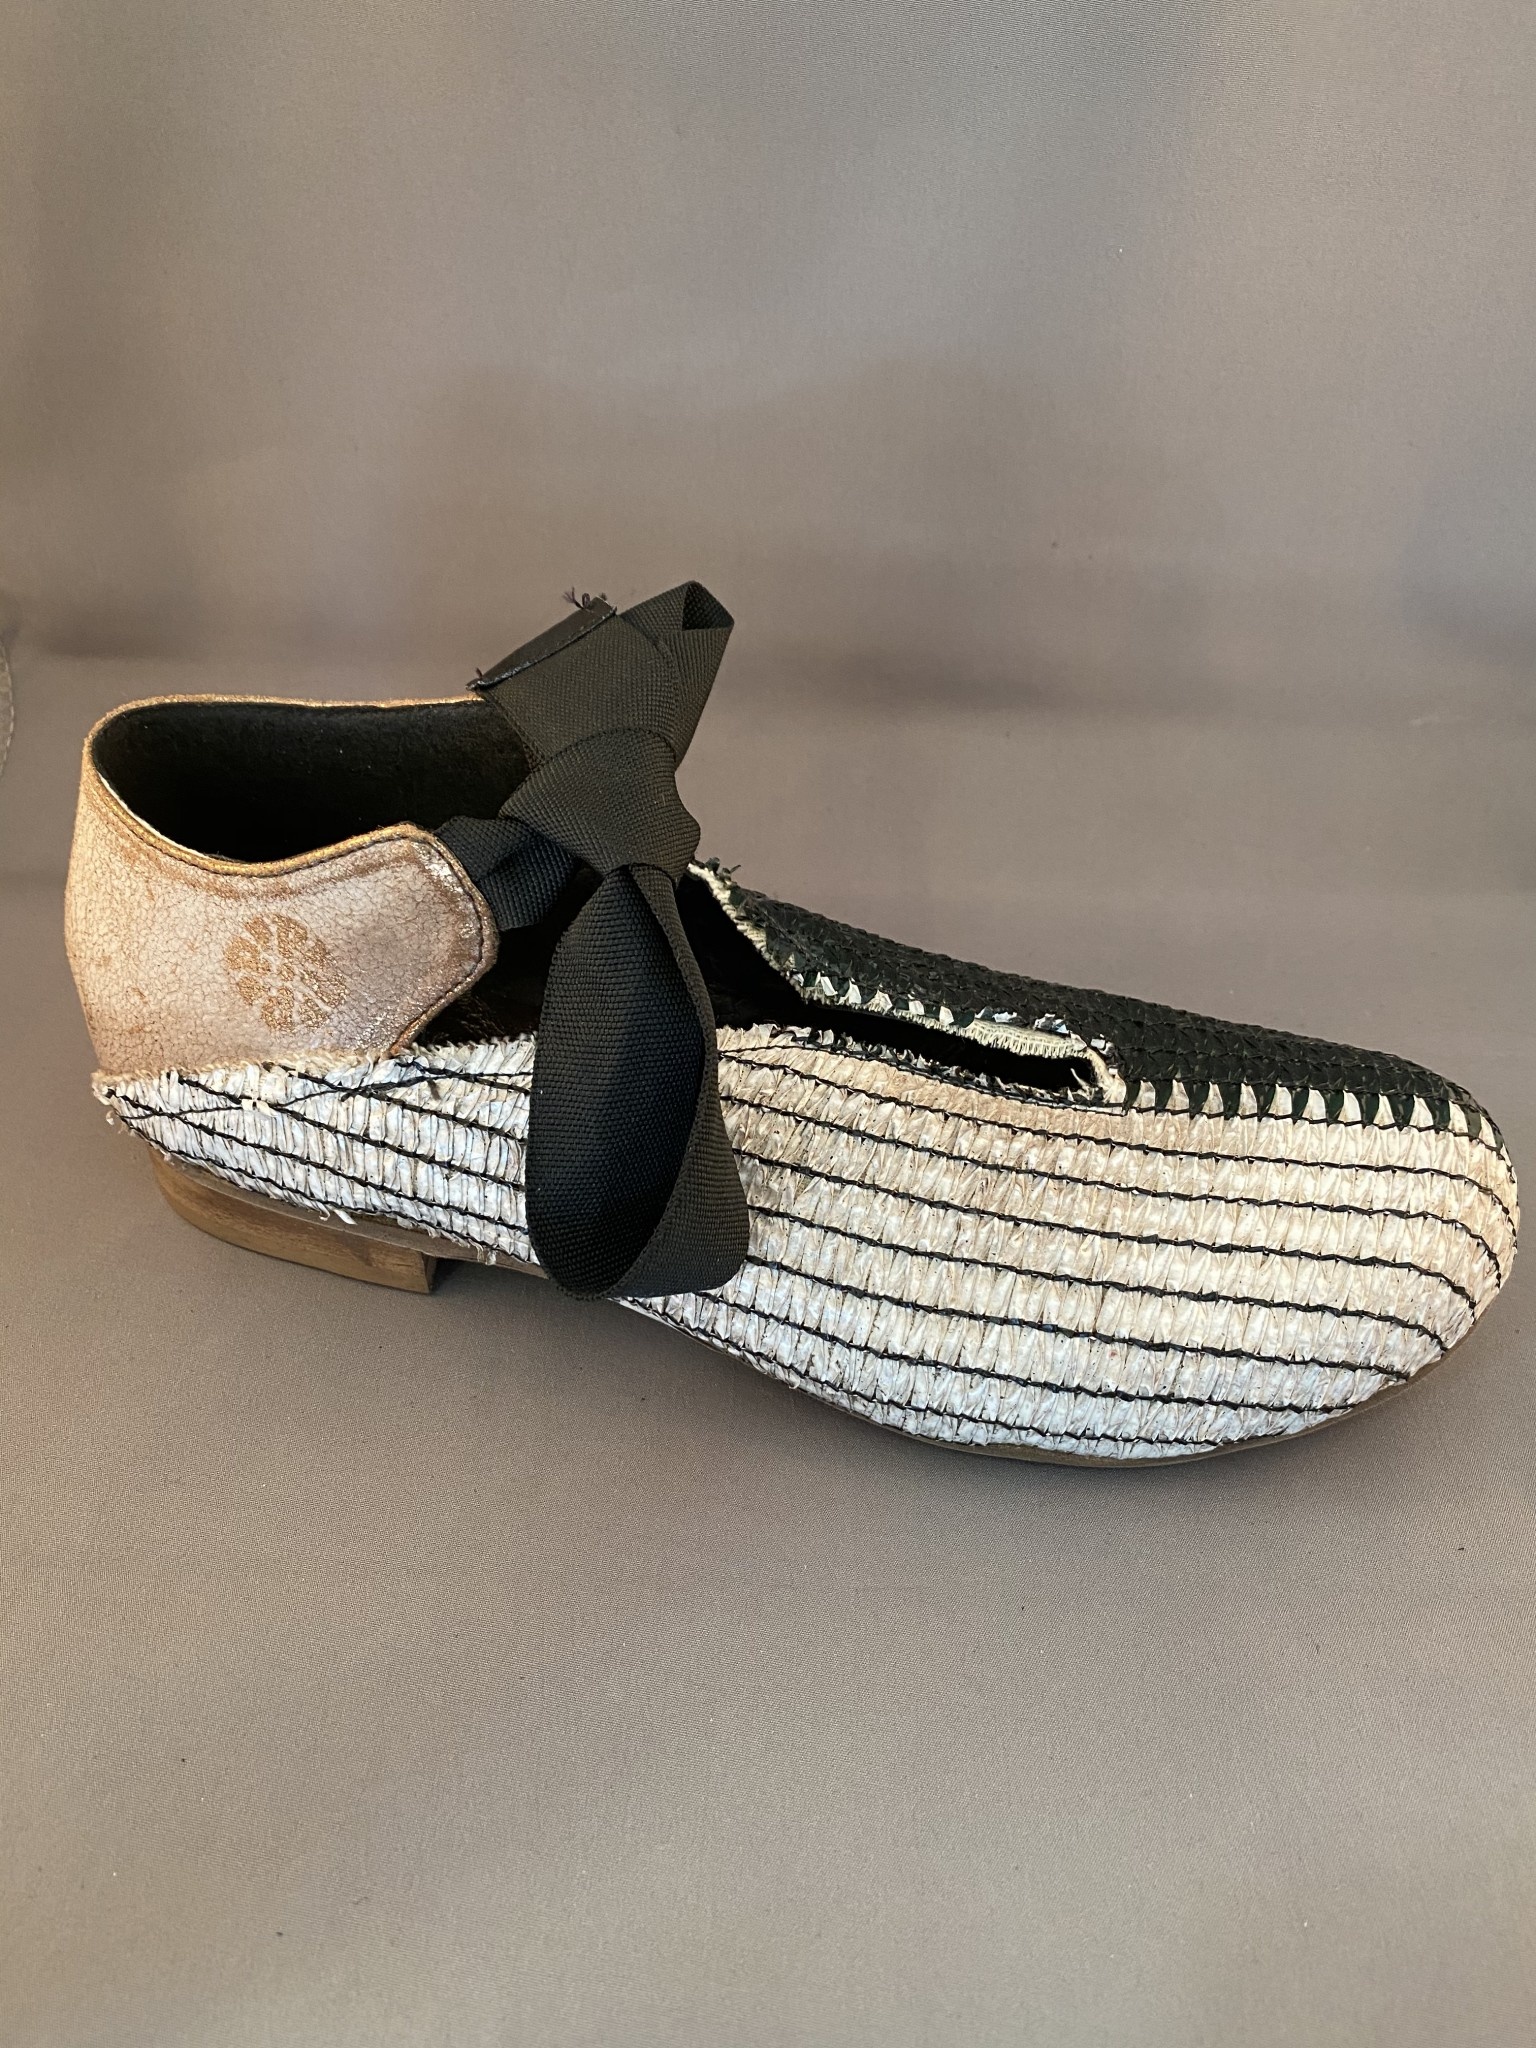 Papucei Malini - Alexandria's Shoes for Women